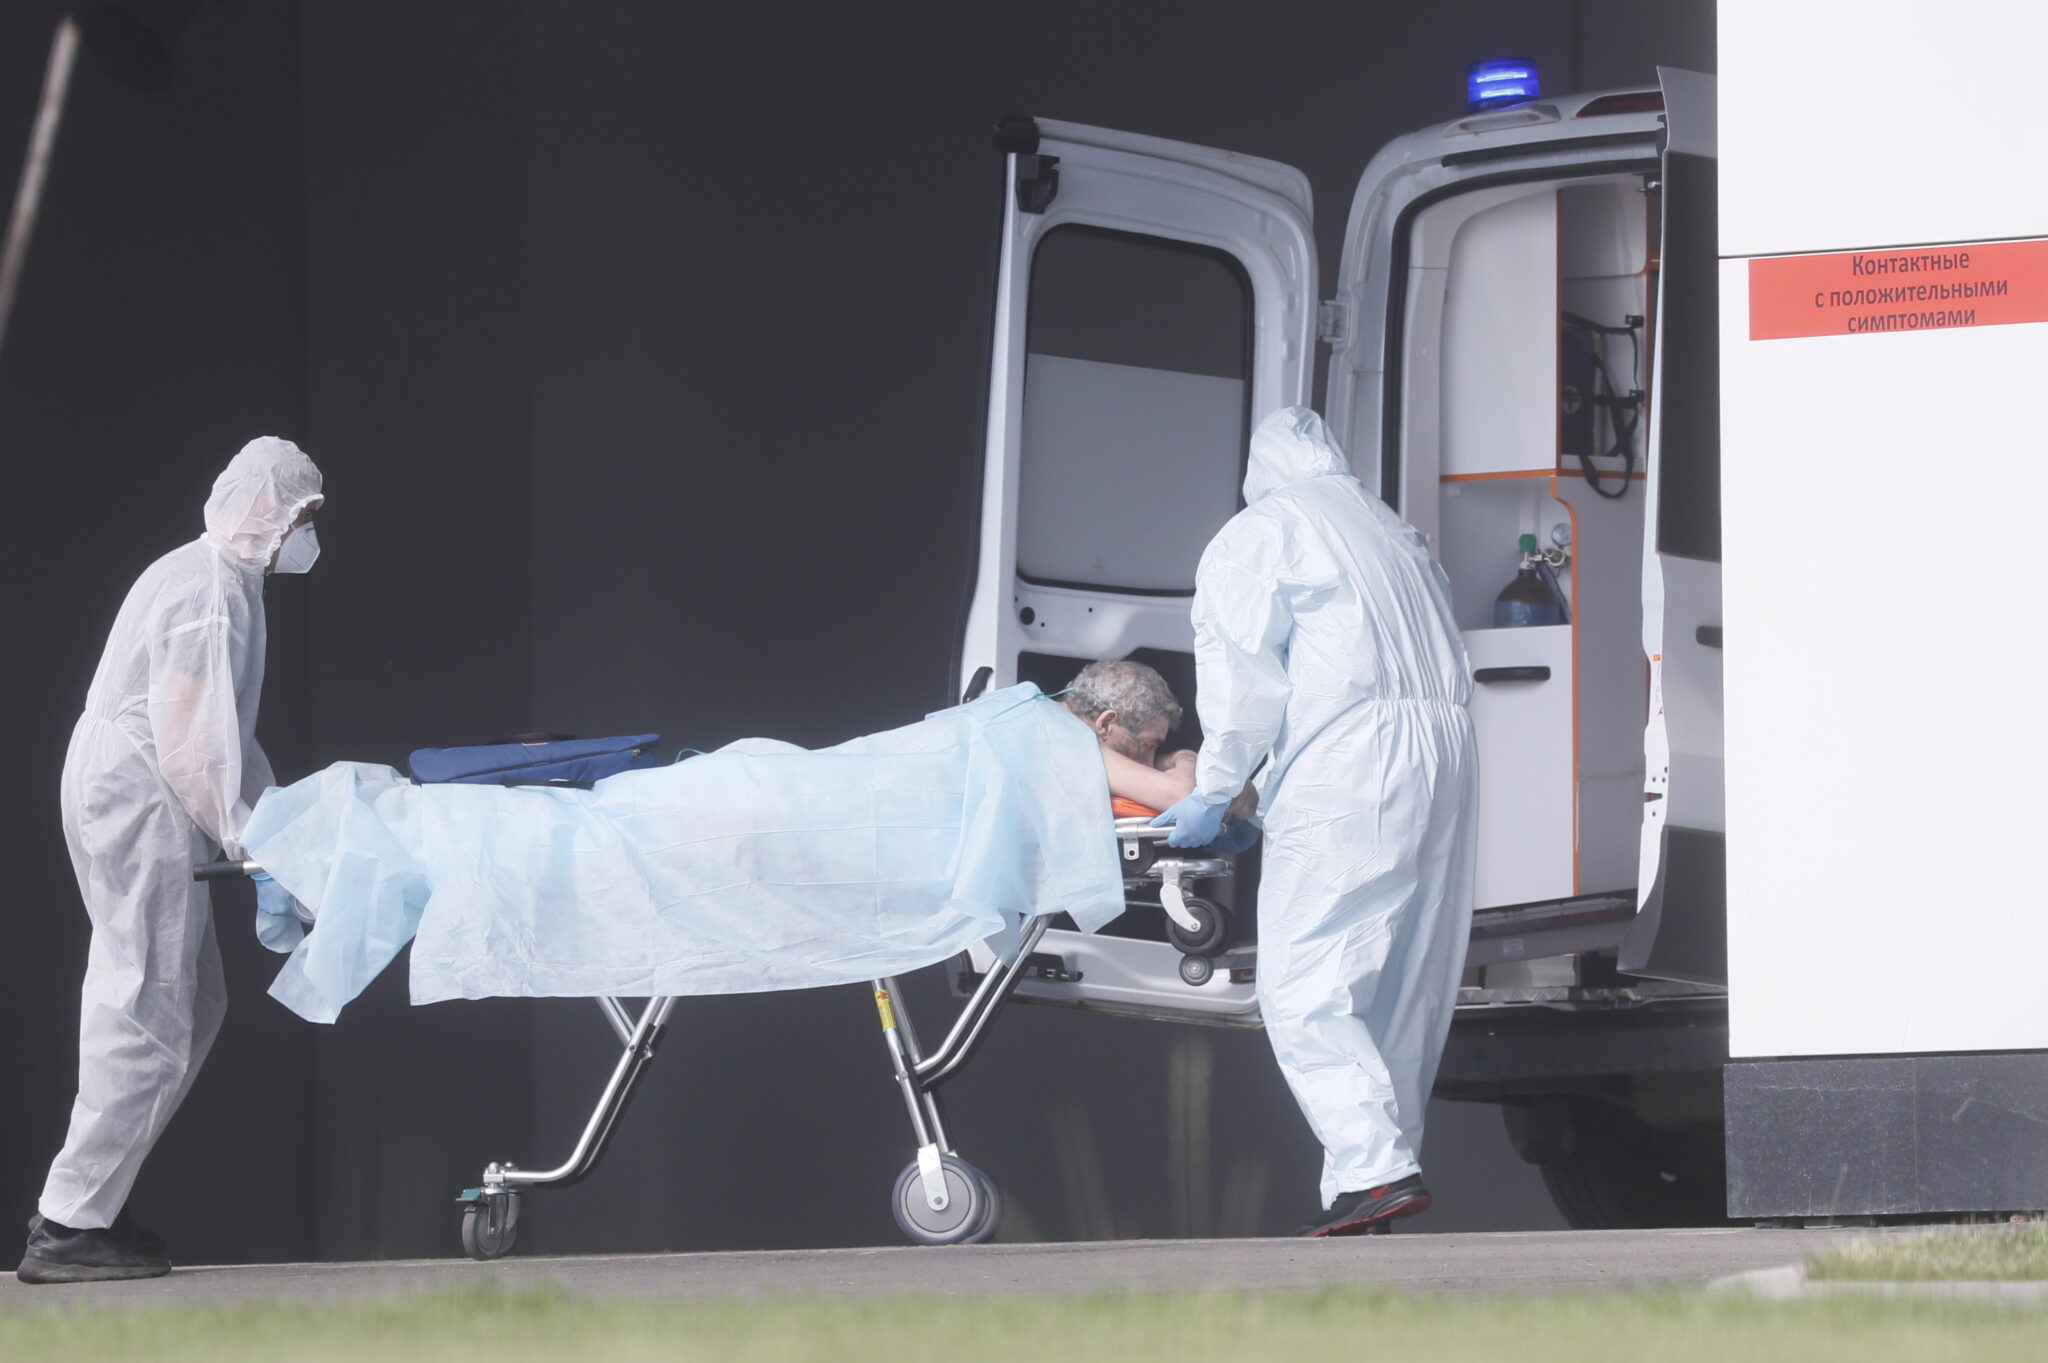 Медики транспортируют мужчину с симптомами коронавируса. Фото MAXIM SHIPENKOV
/ TASS / Scanpix / Leta